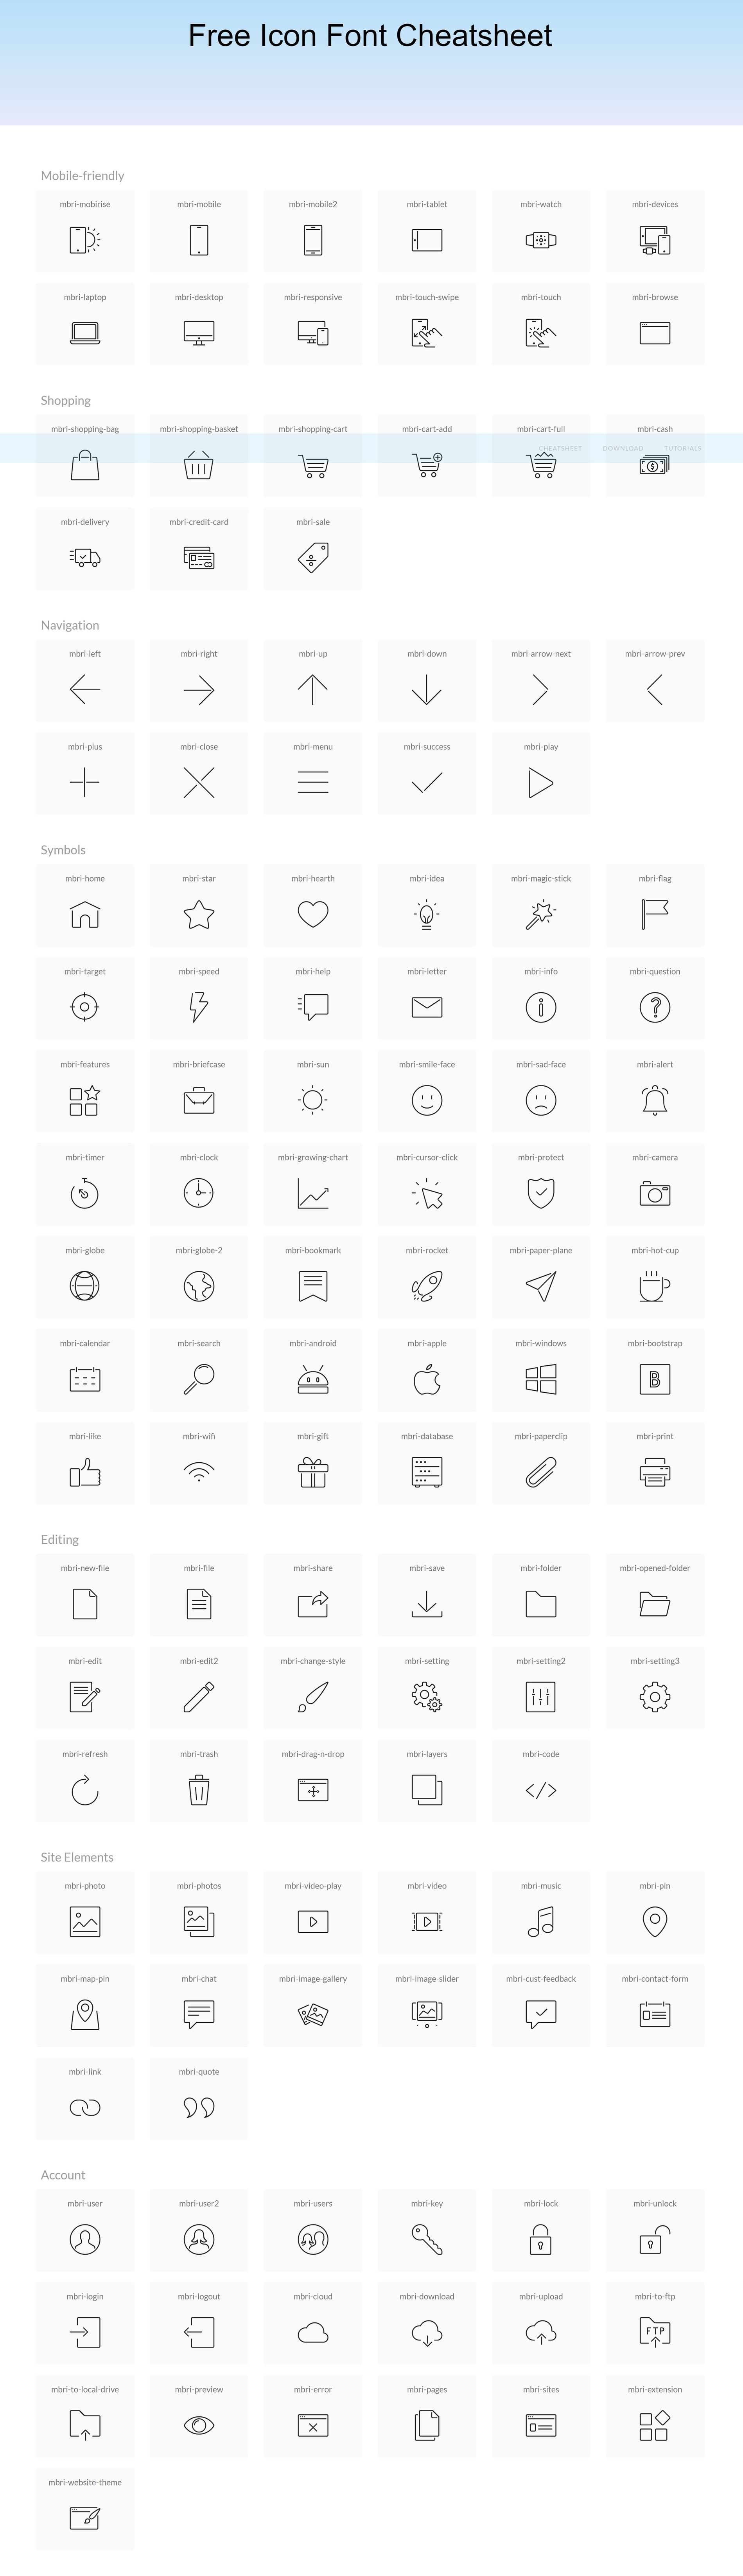 Create Icon Font